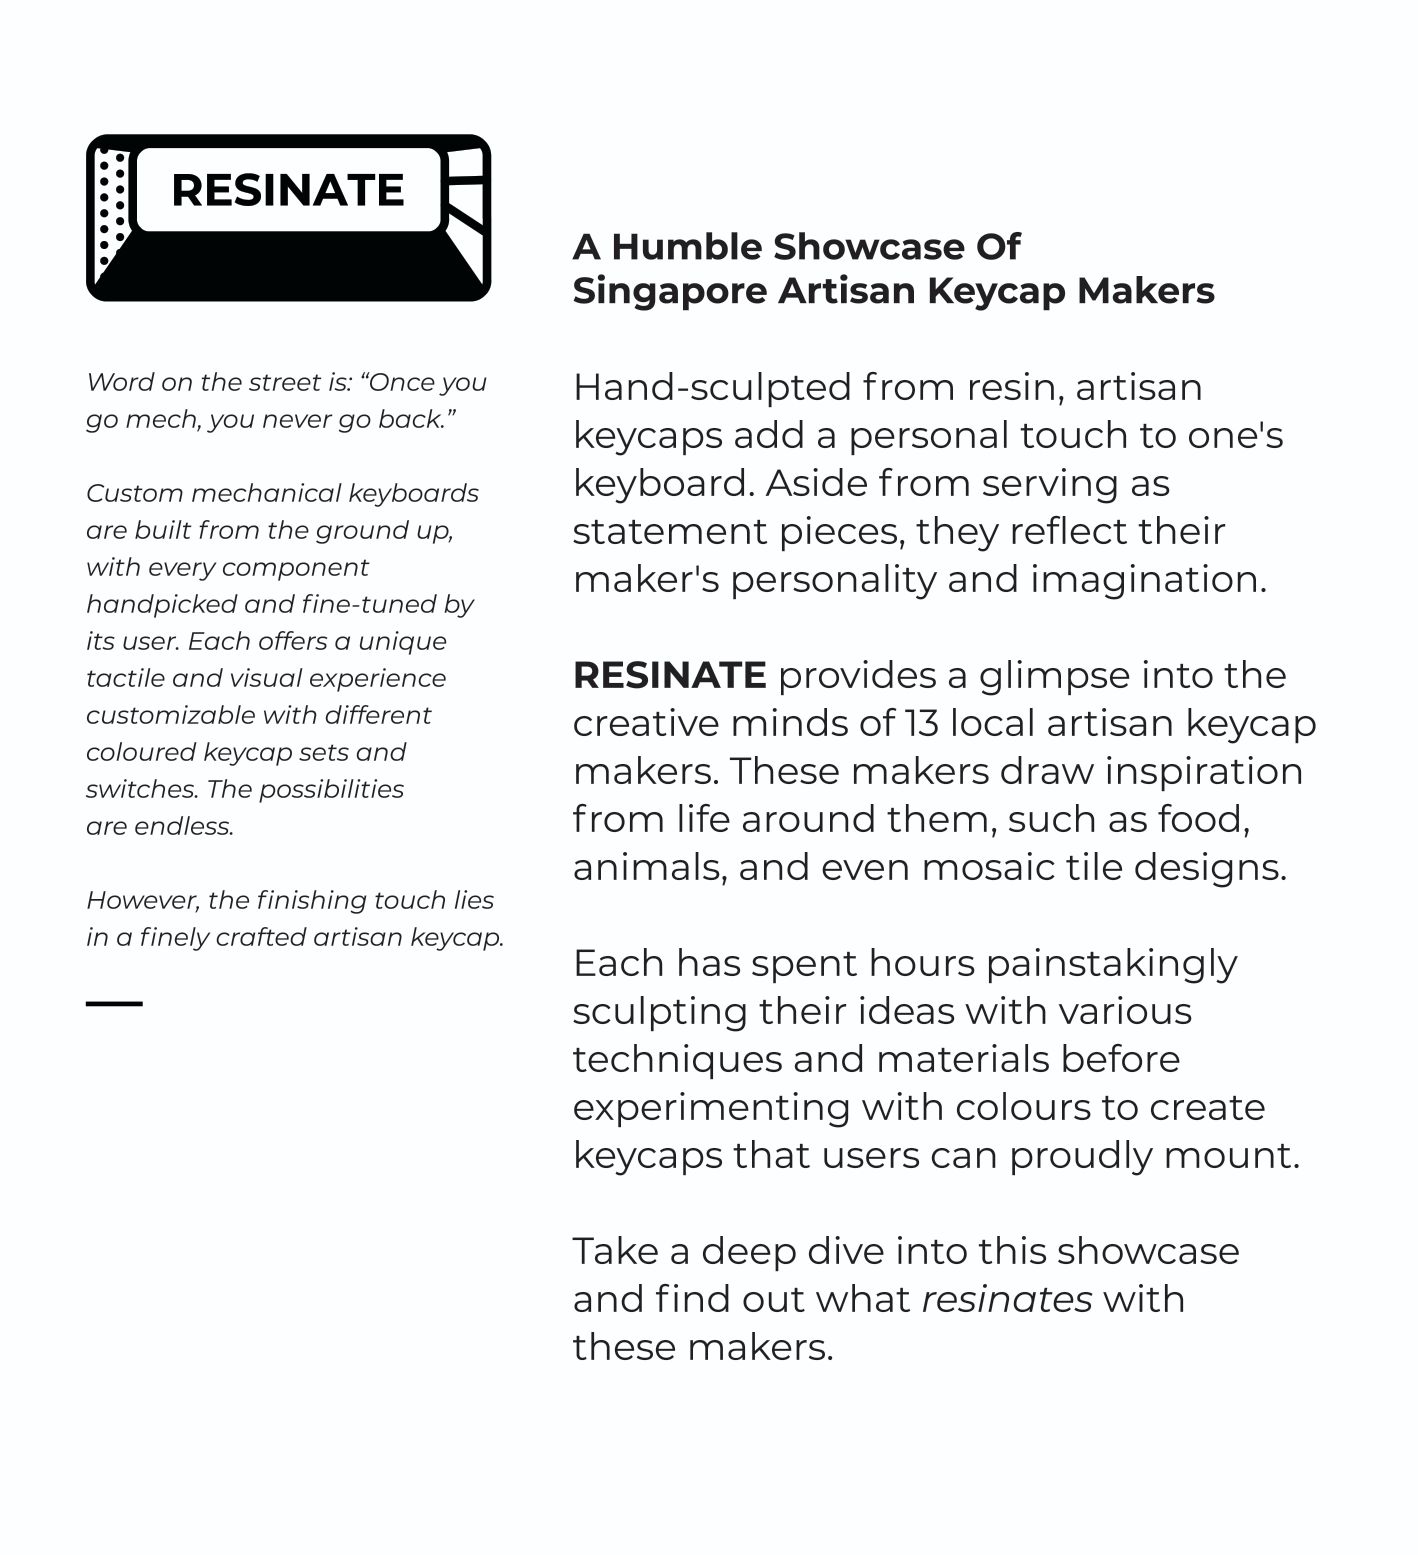 Resinate: Singapore Artisan Makers Exhibit